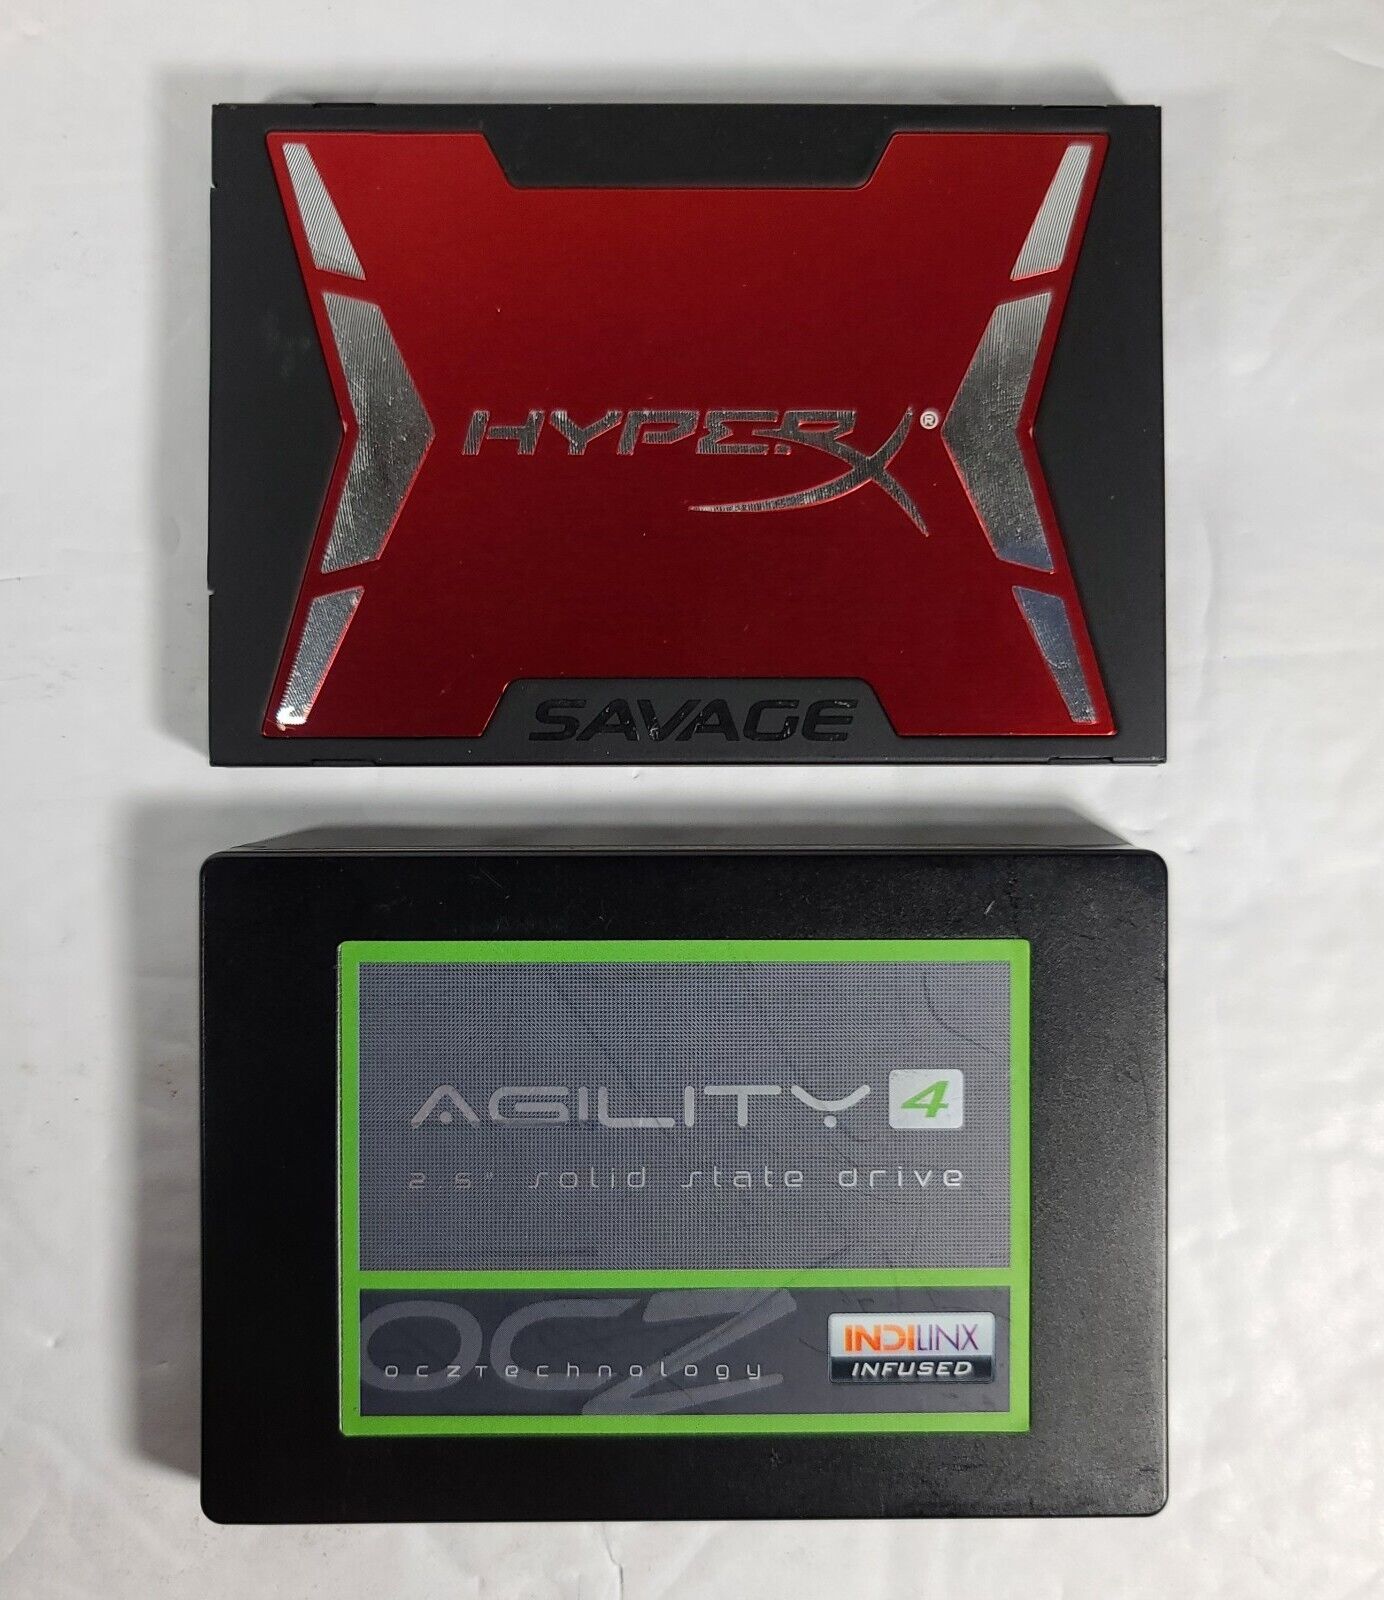 Kingston HyperX SHSS37A 120GB & OCZ Agility 4 SATA III 2.5 SSD AGT4-25SAT3-128G